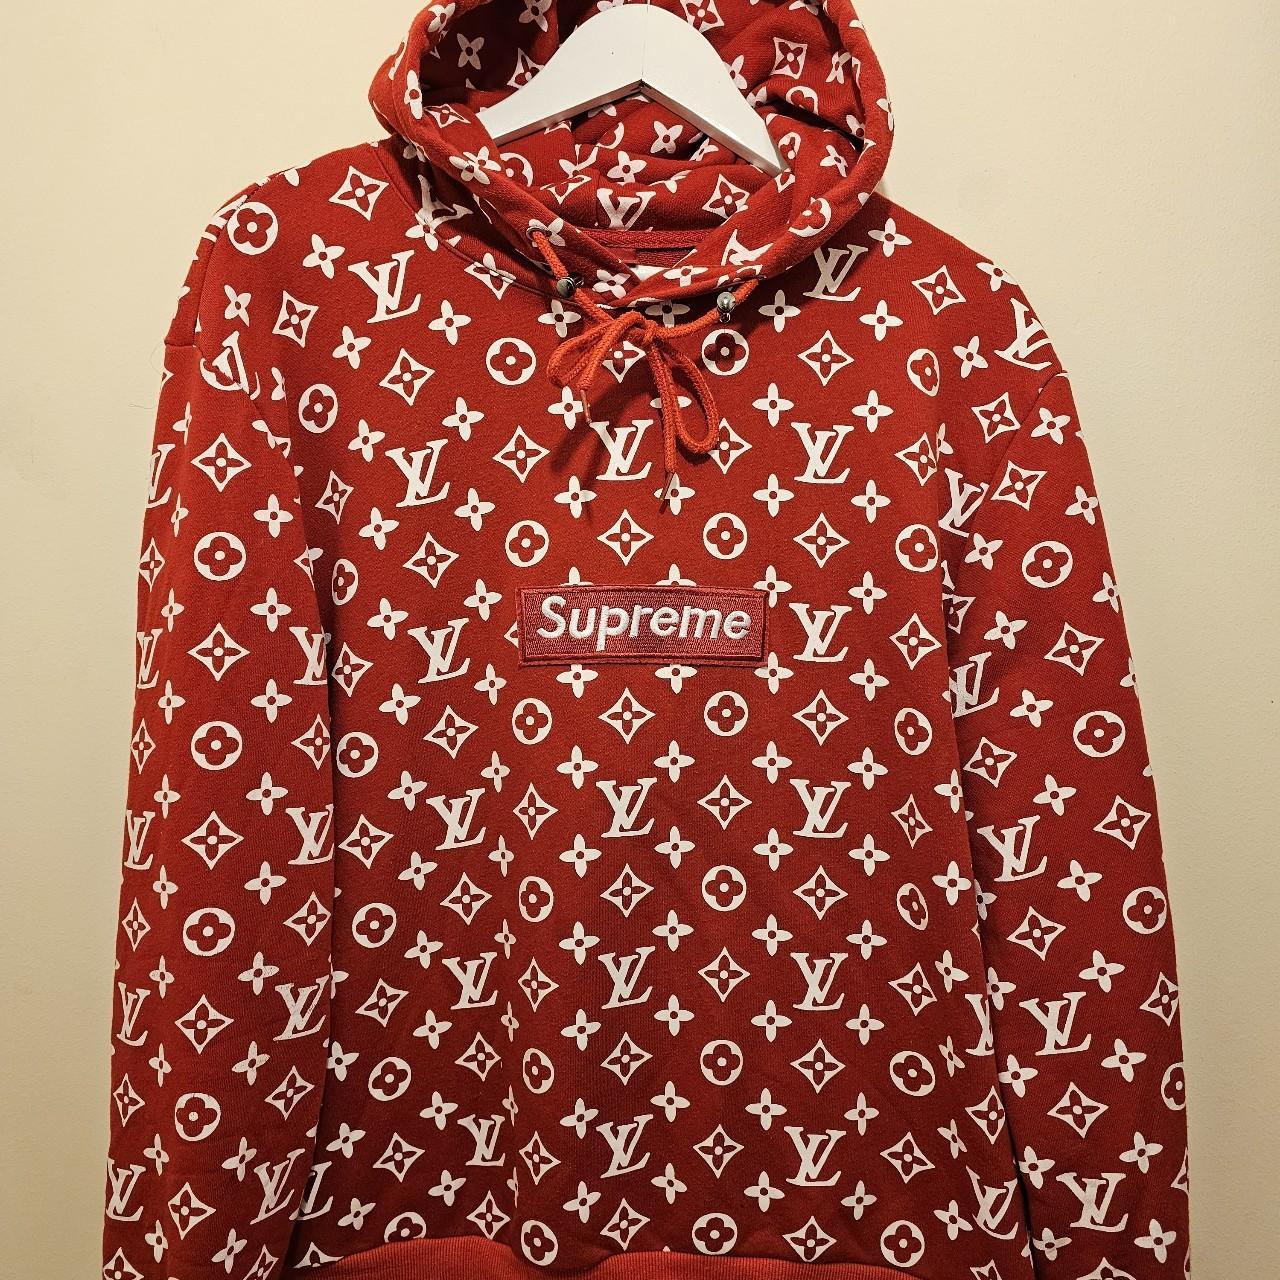 Supreme Louis Vuitton hoodie, Size Medium, Made in